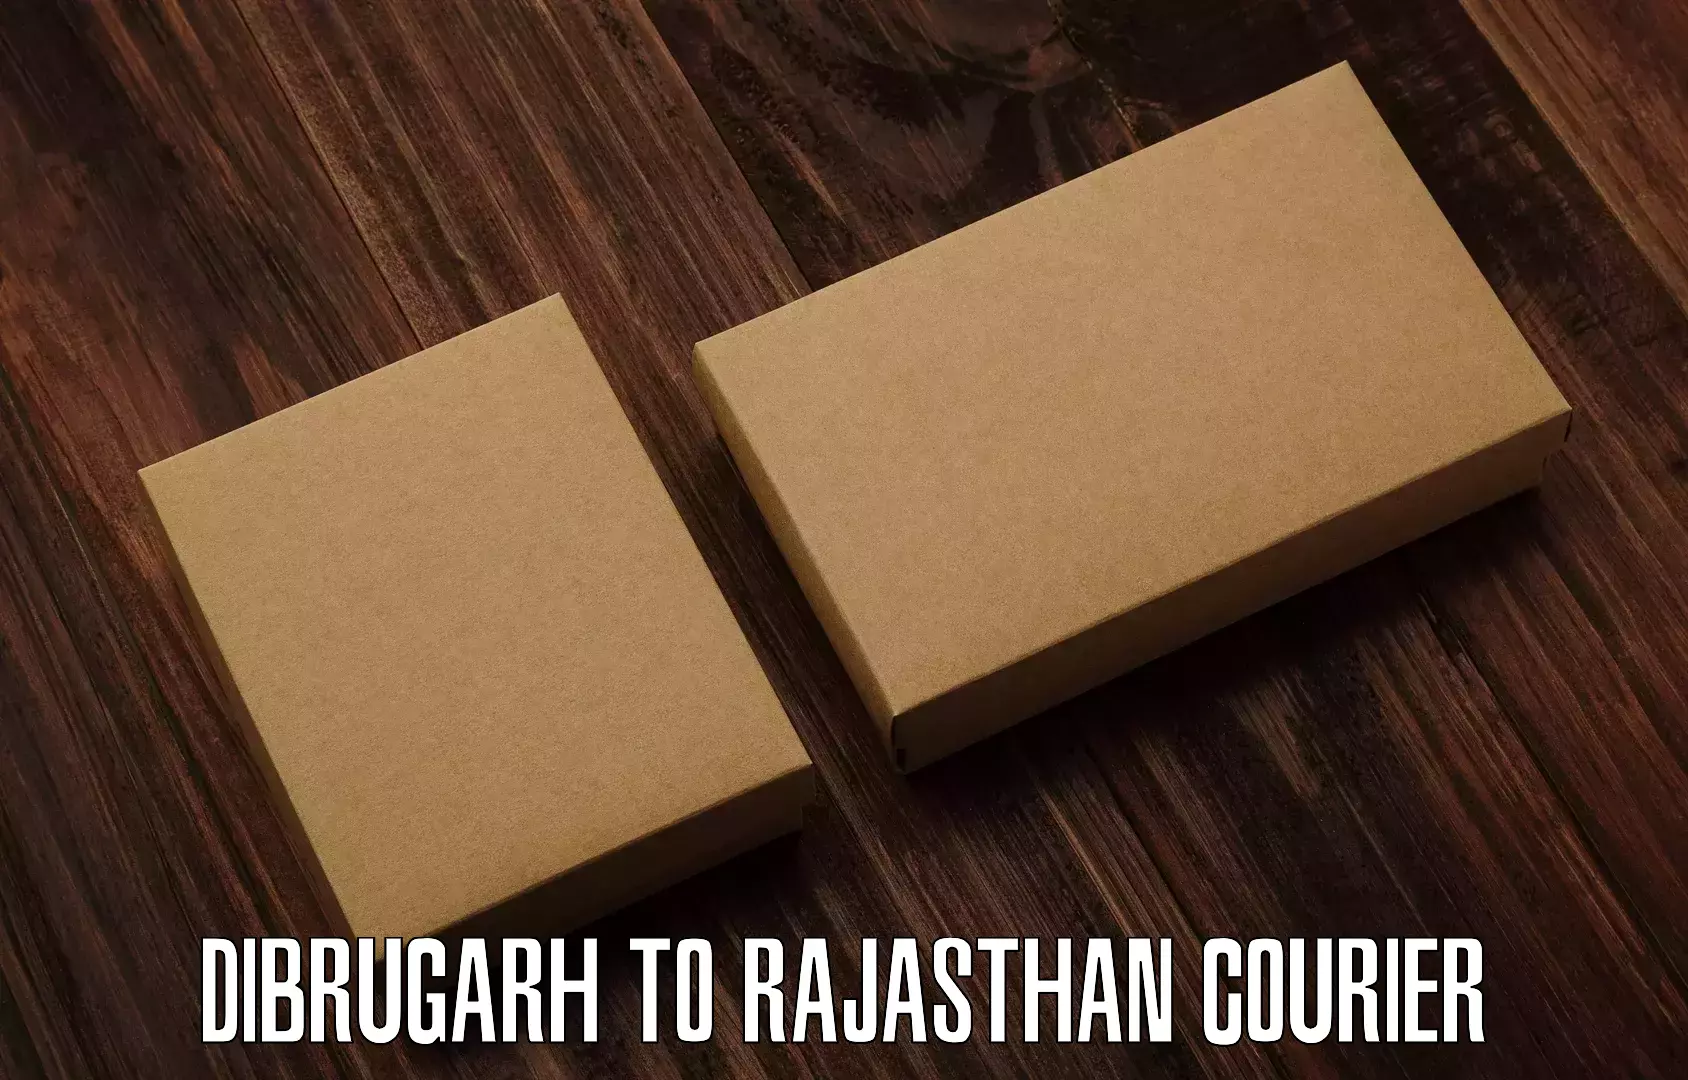 Courier service partnerships Dibrugarh to Bhawani Mandi